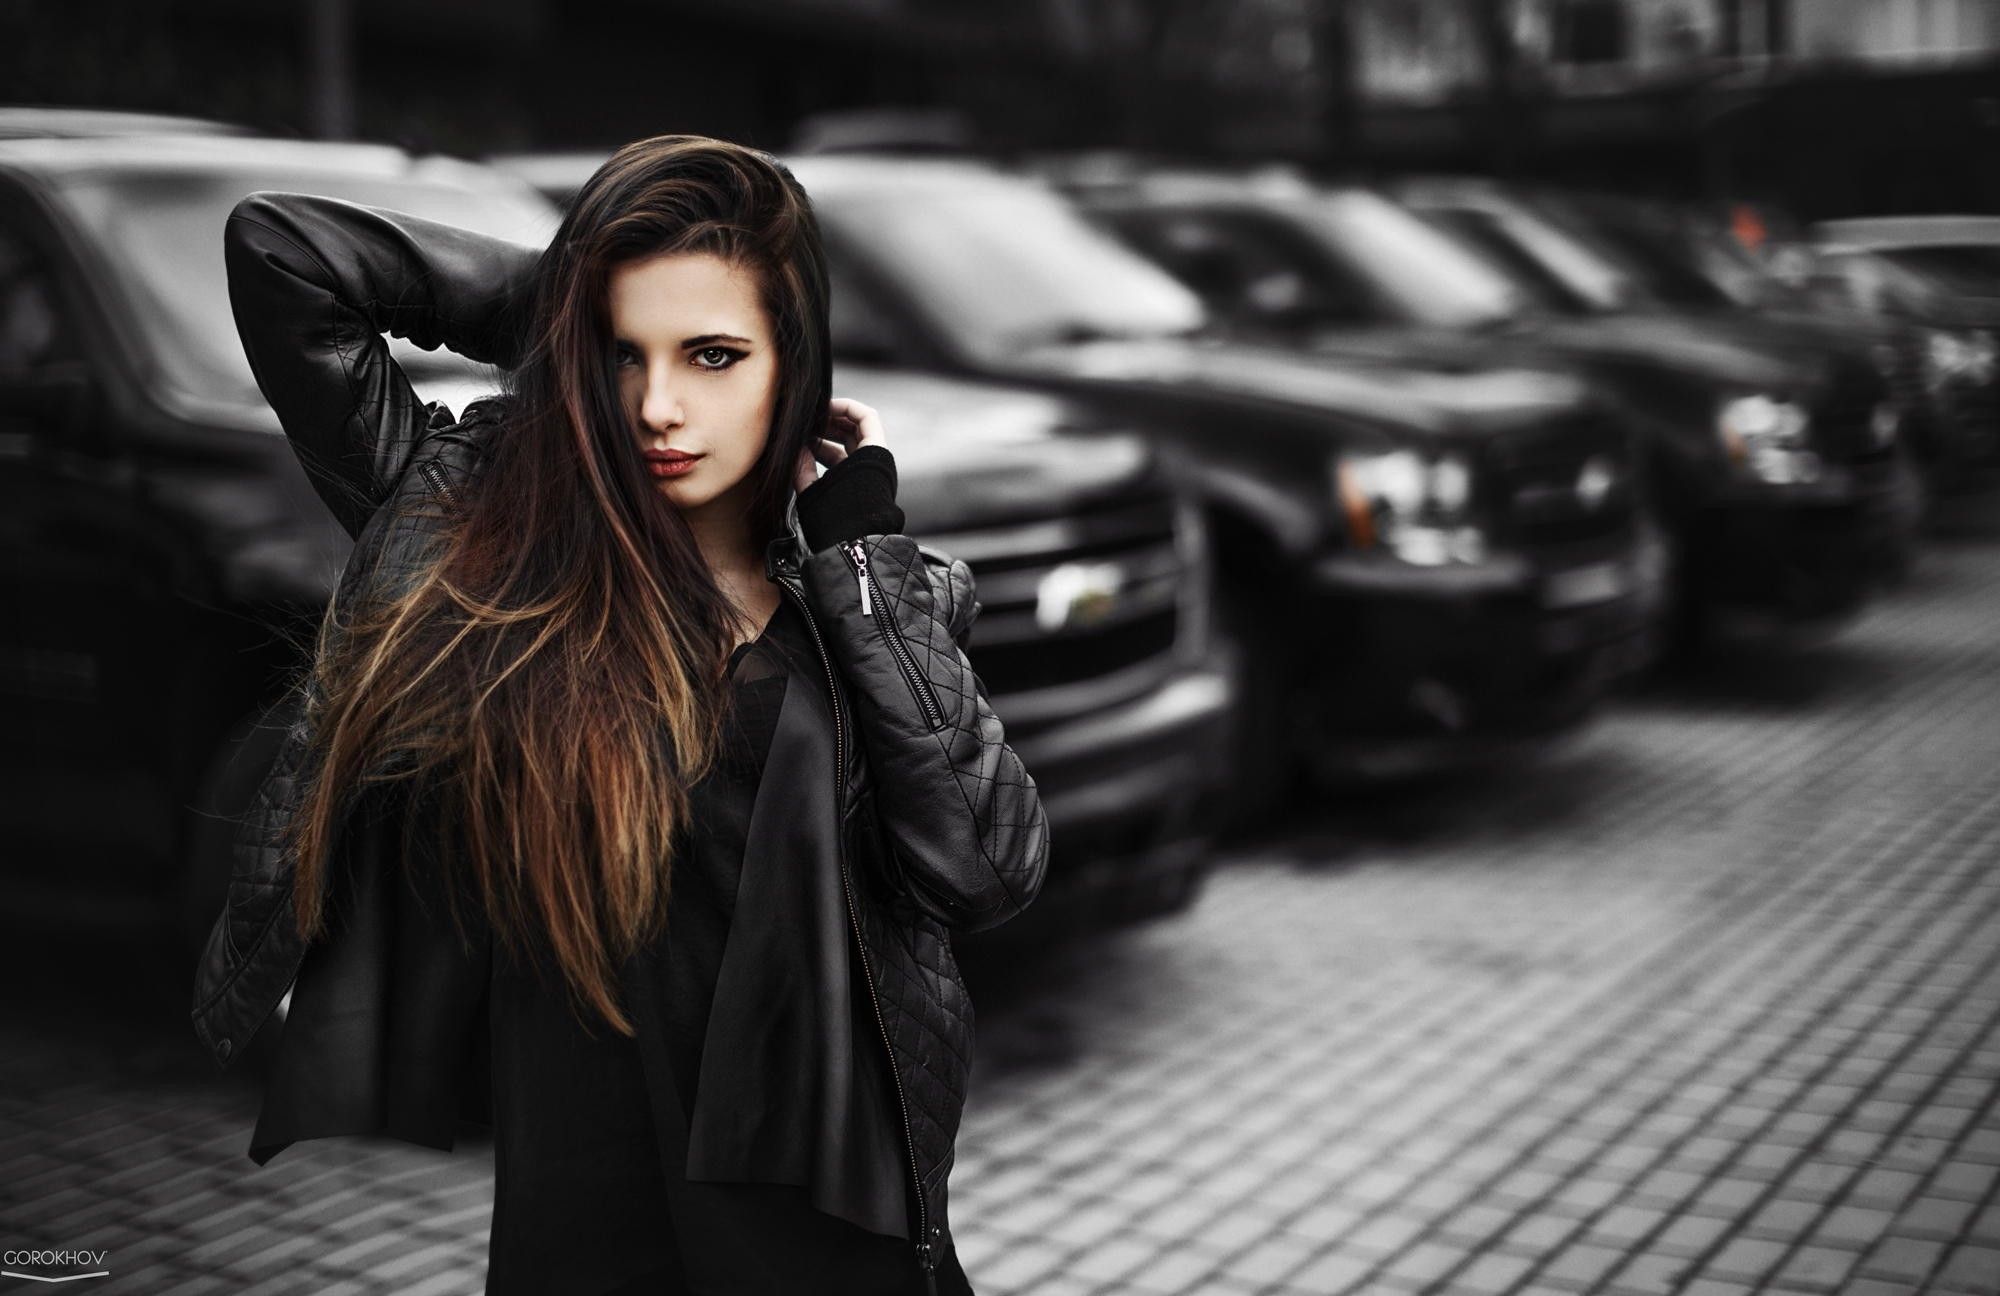 Girl with Mafia Cars. Beauty model, Beauty, Hair